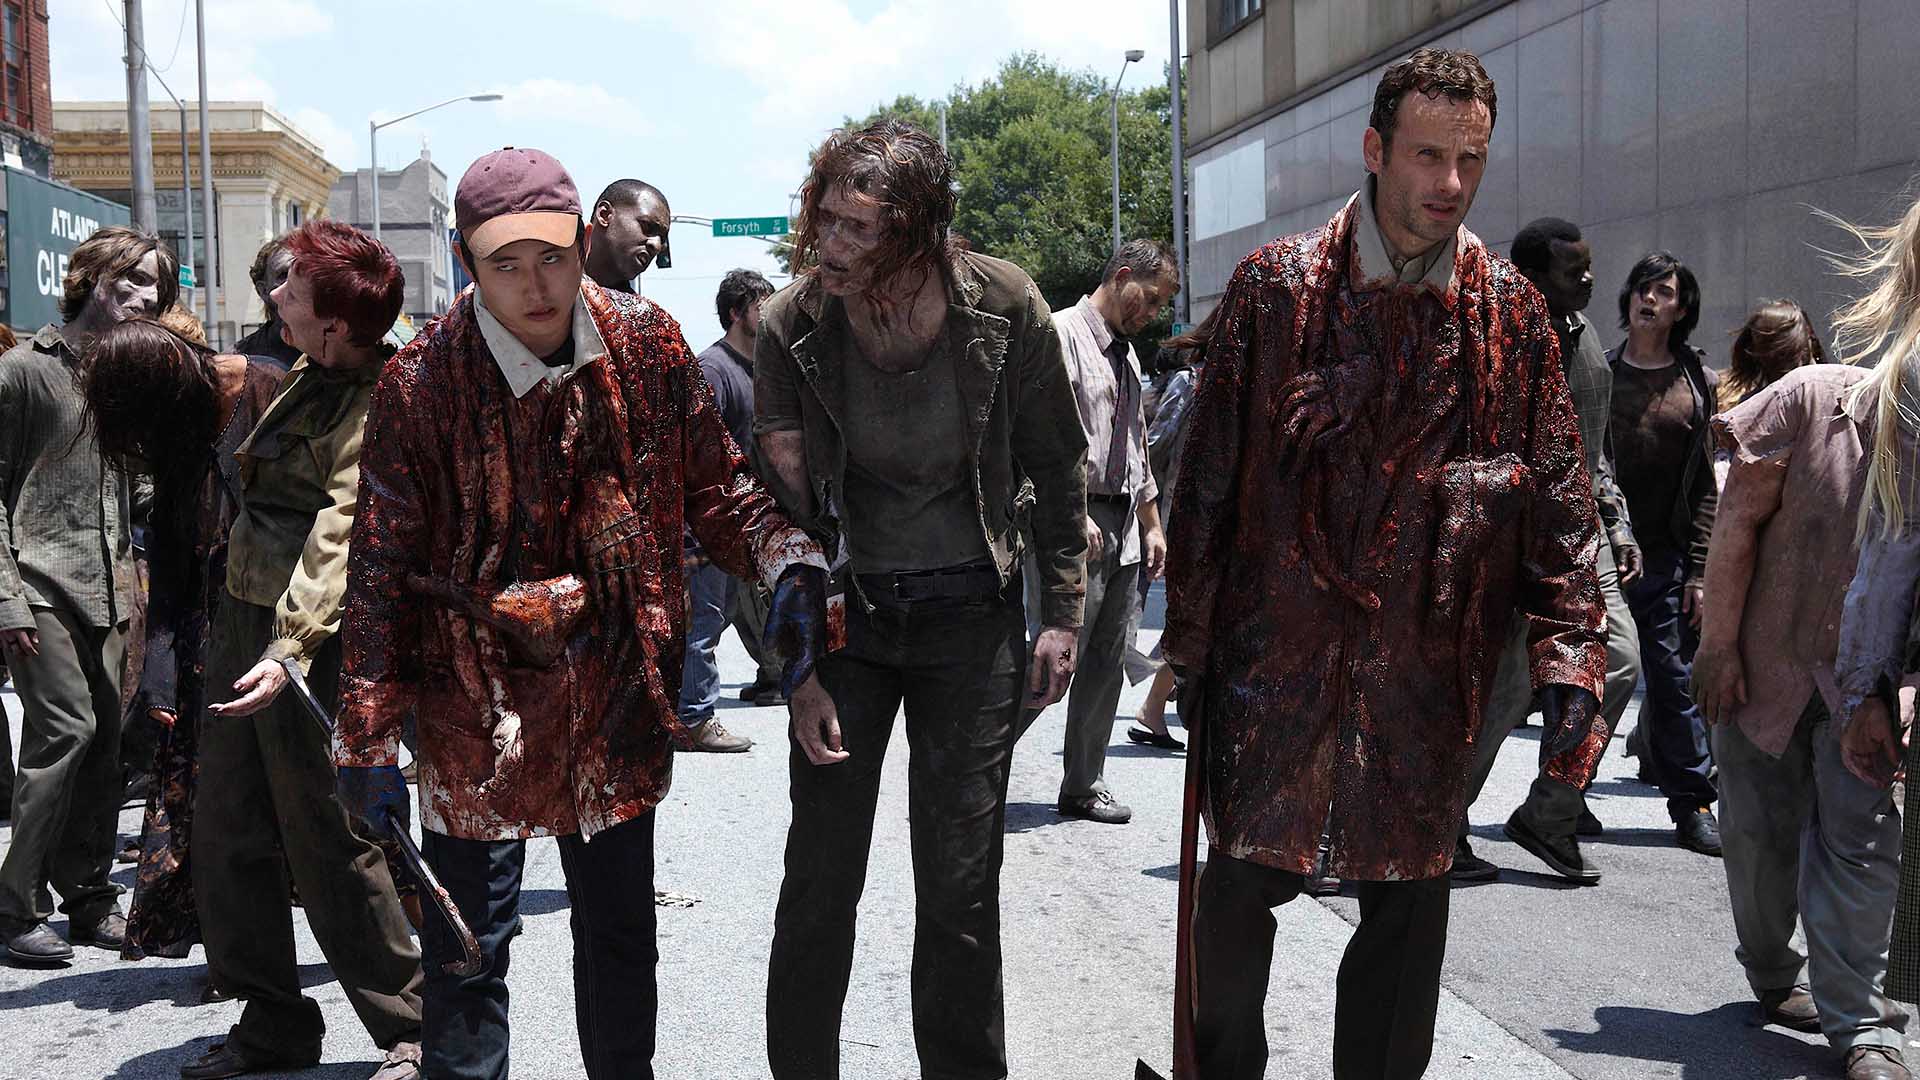 Missing The Last of Us? The Original Zombie Apocalypse Is on AMC+